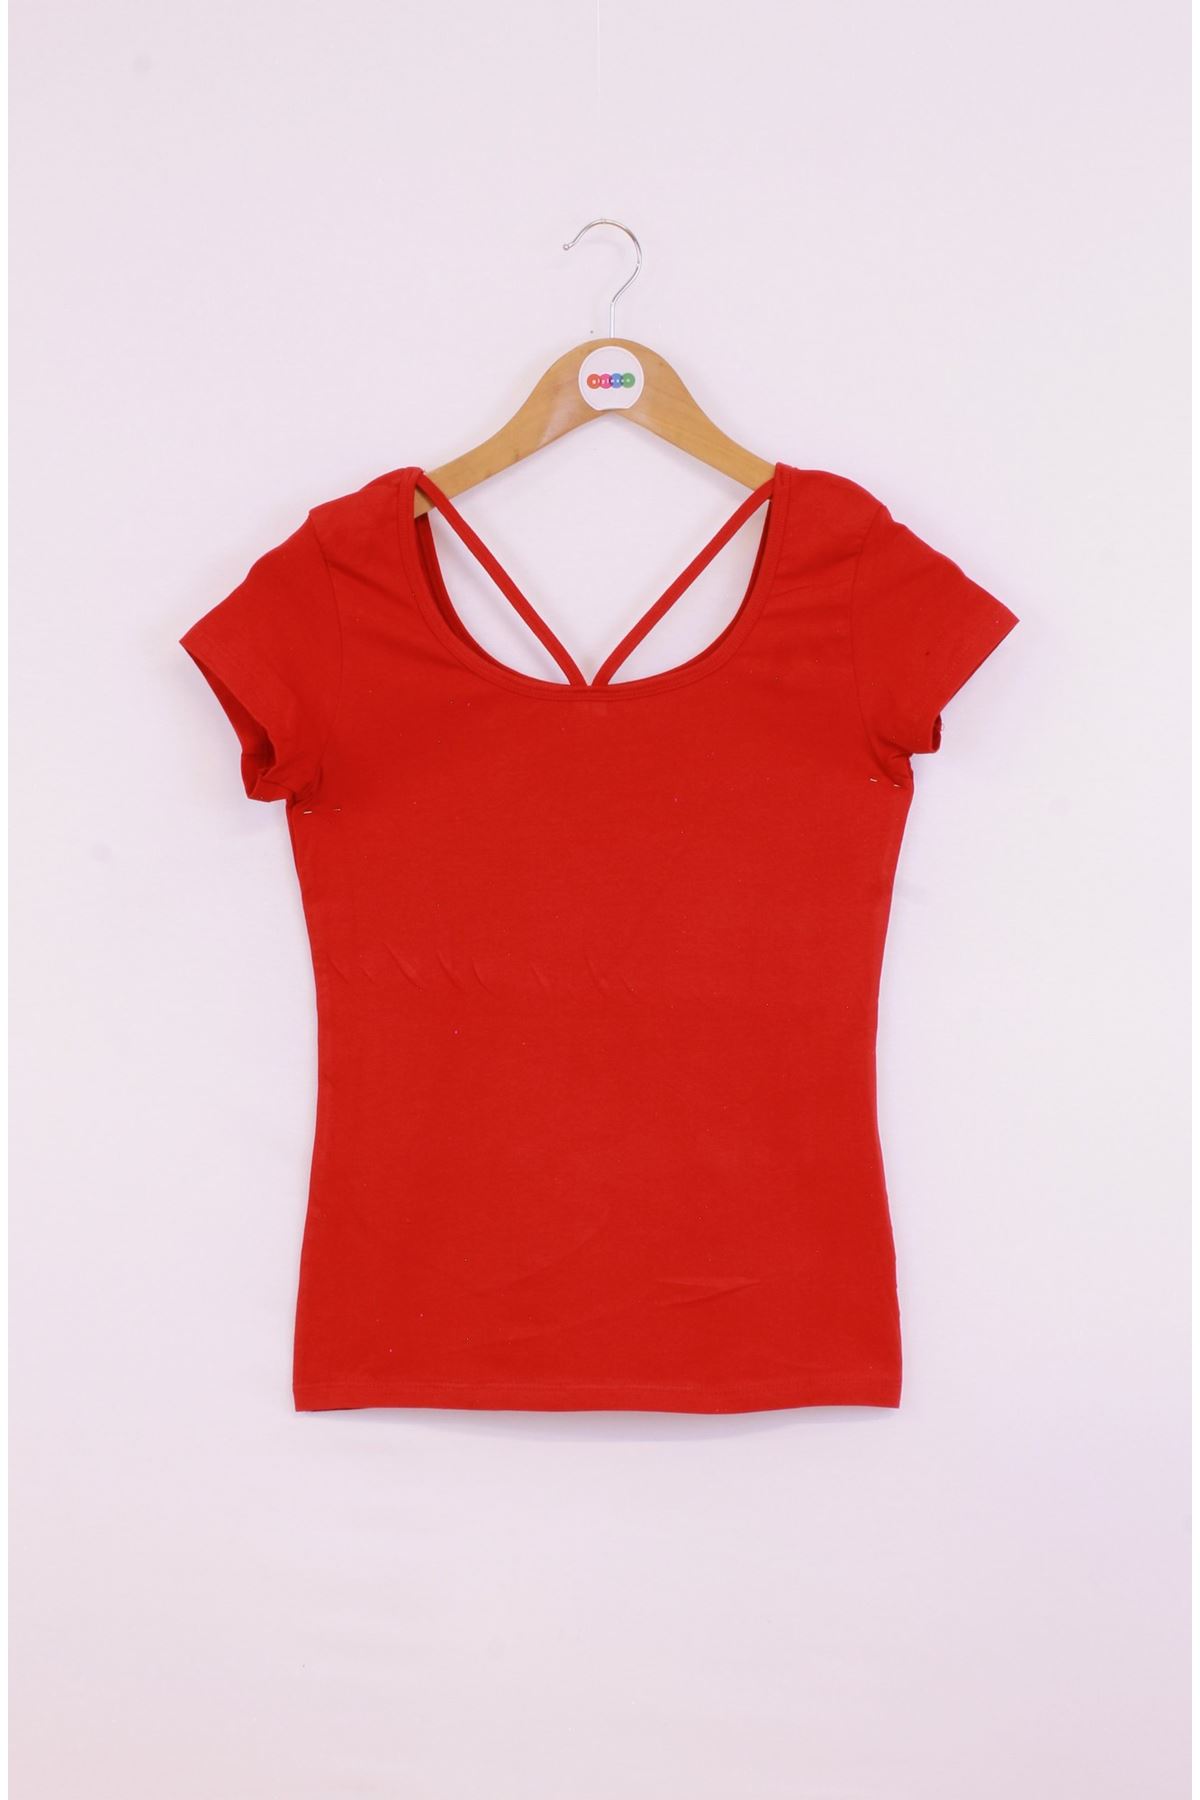 Giyinsen Kadın Kırmızı Tişört - 23YL71595007